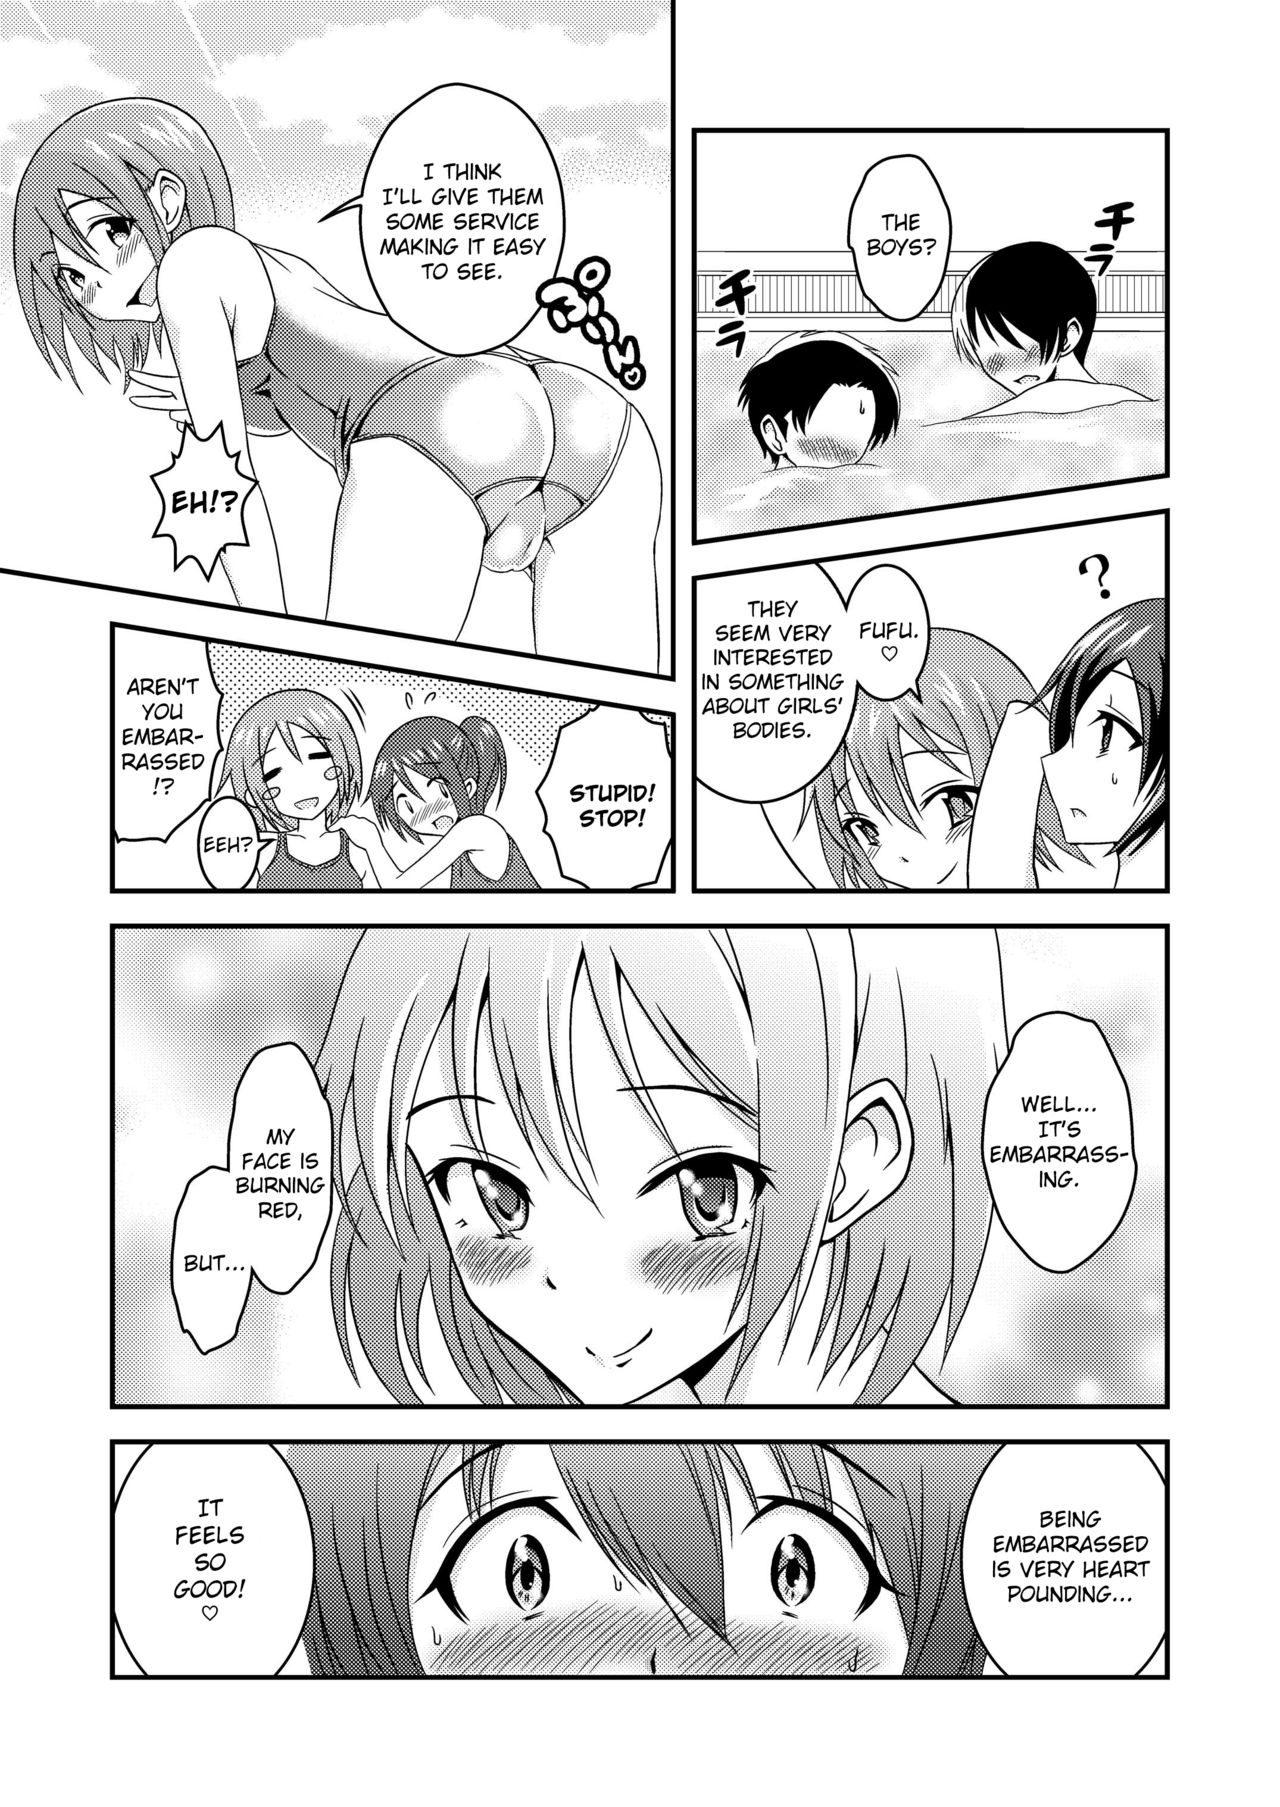 Embarrassed Naked Manga